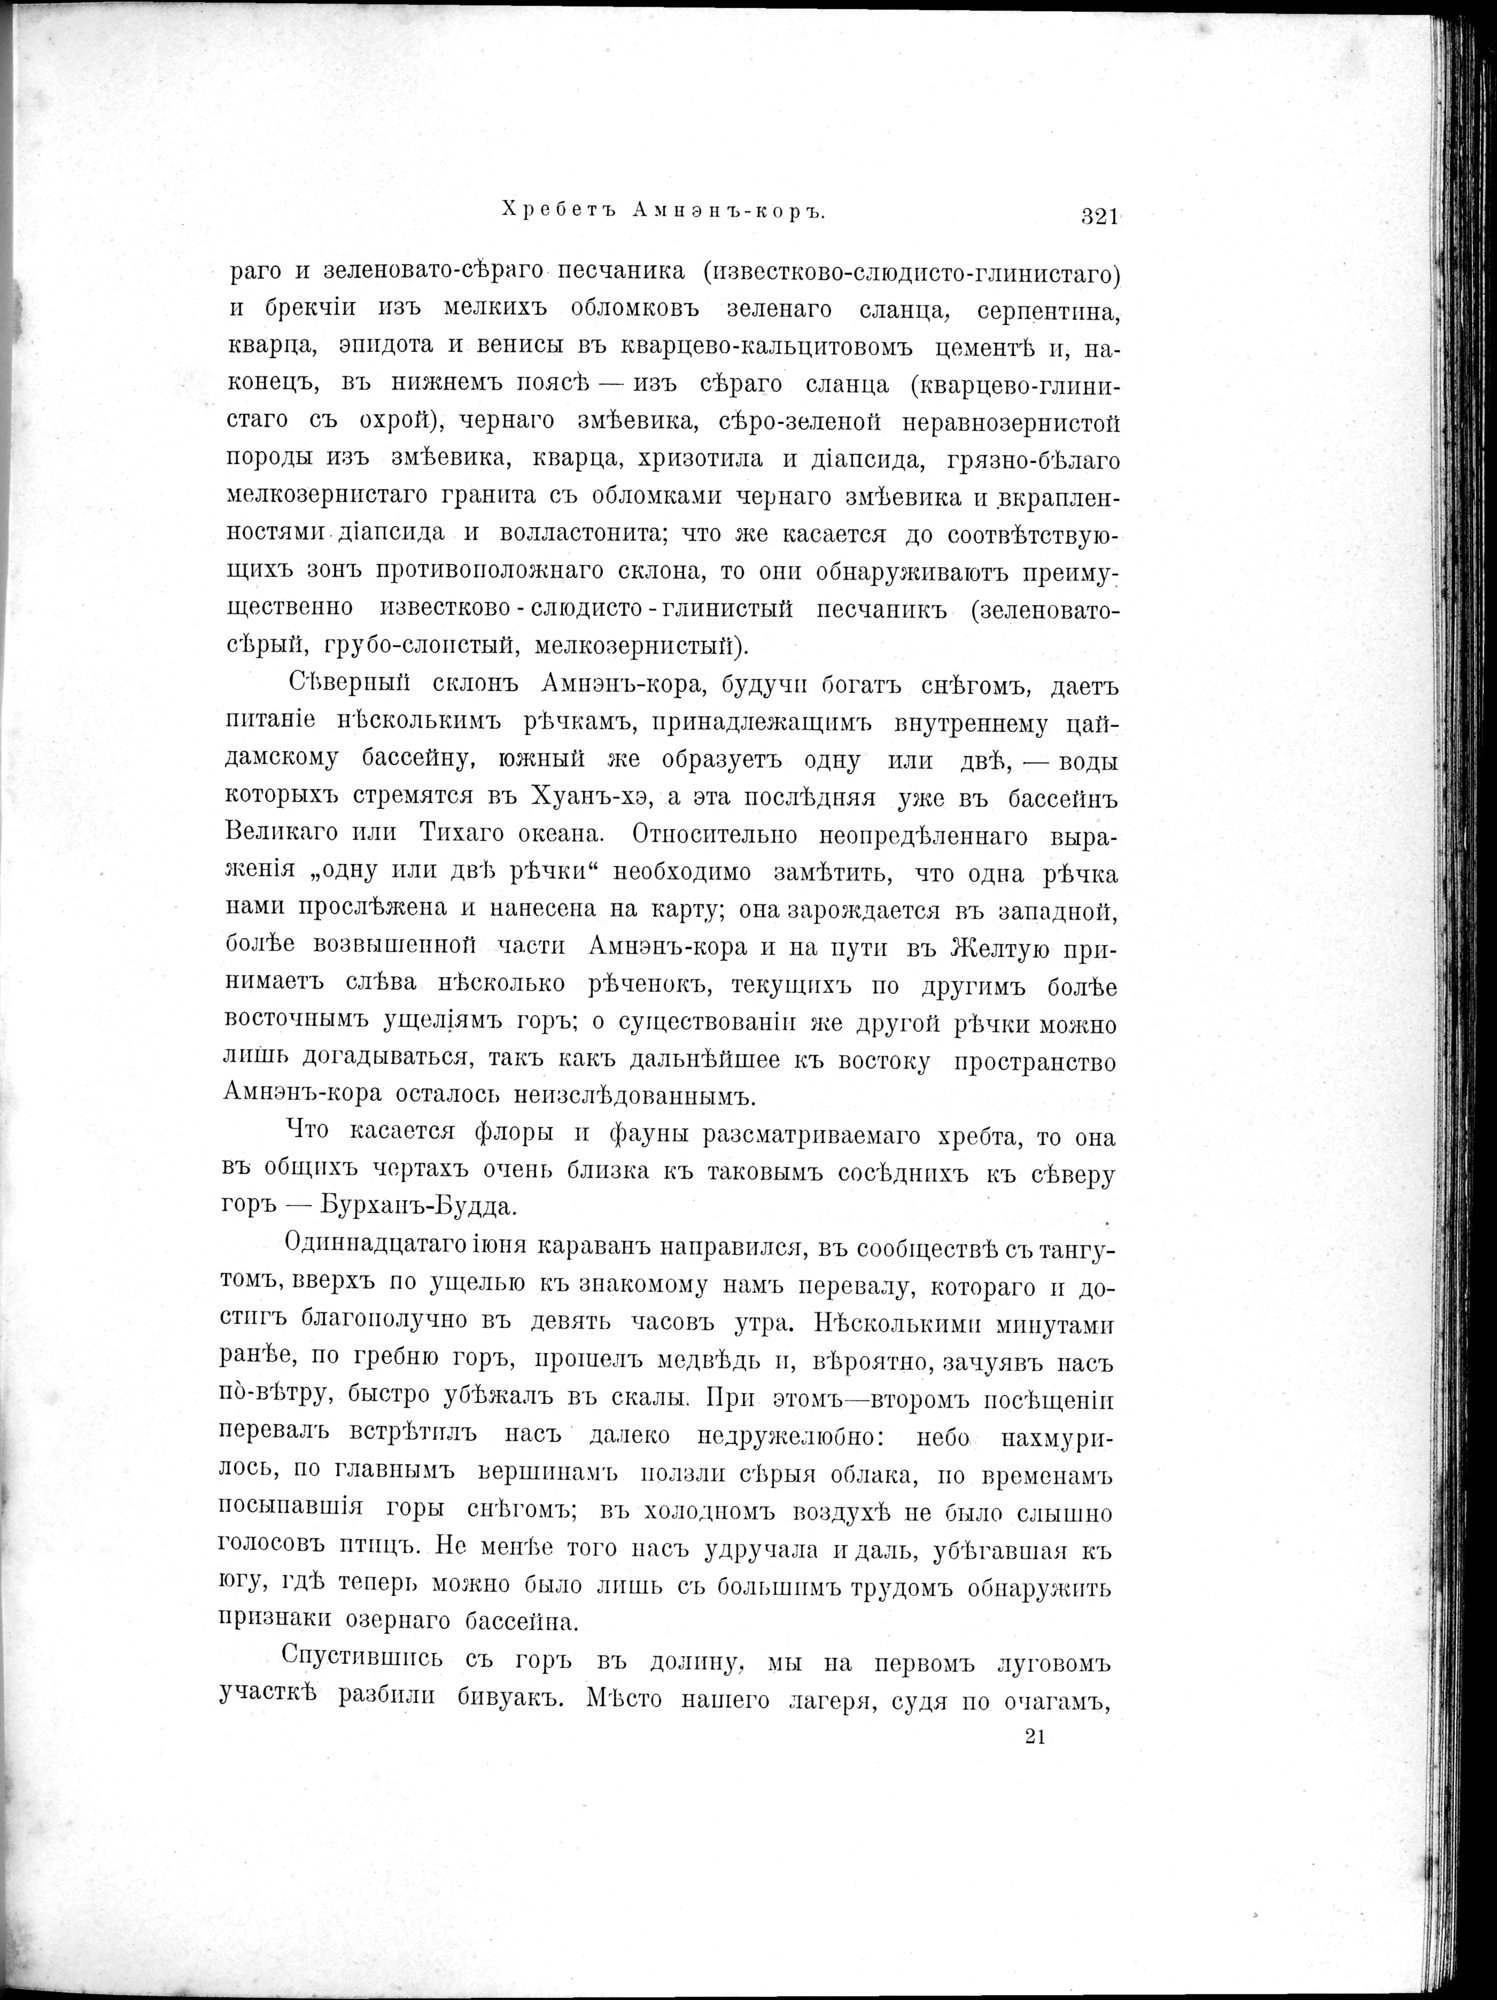 Mongoliia i Kam : vol.2 / Page 91 (Grayscale High Resolution Image)